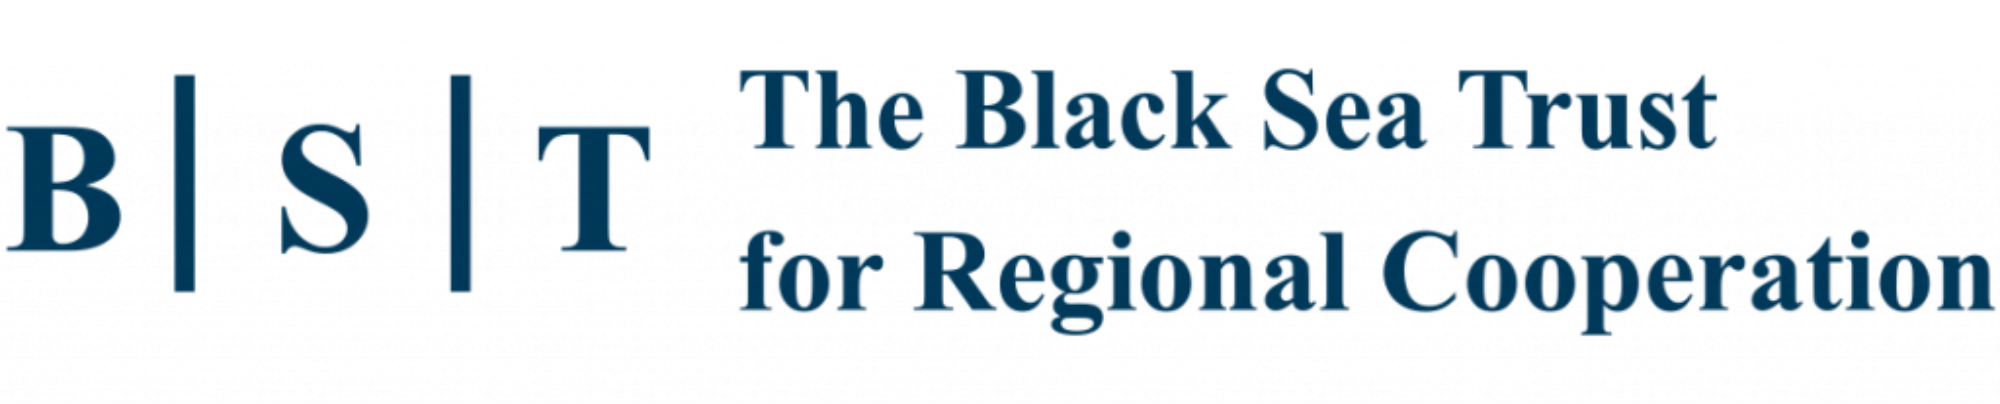 The Black Sea Trust for Regional Cooperation